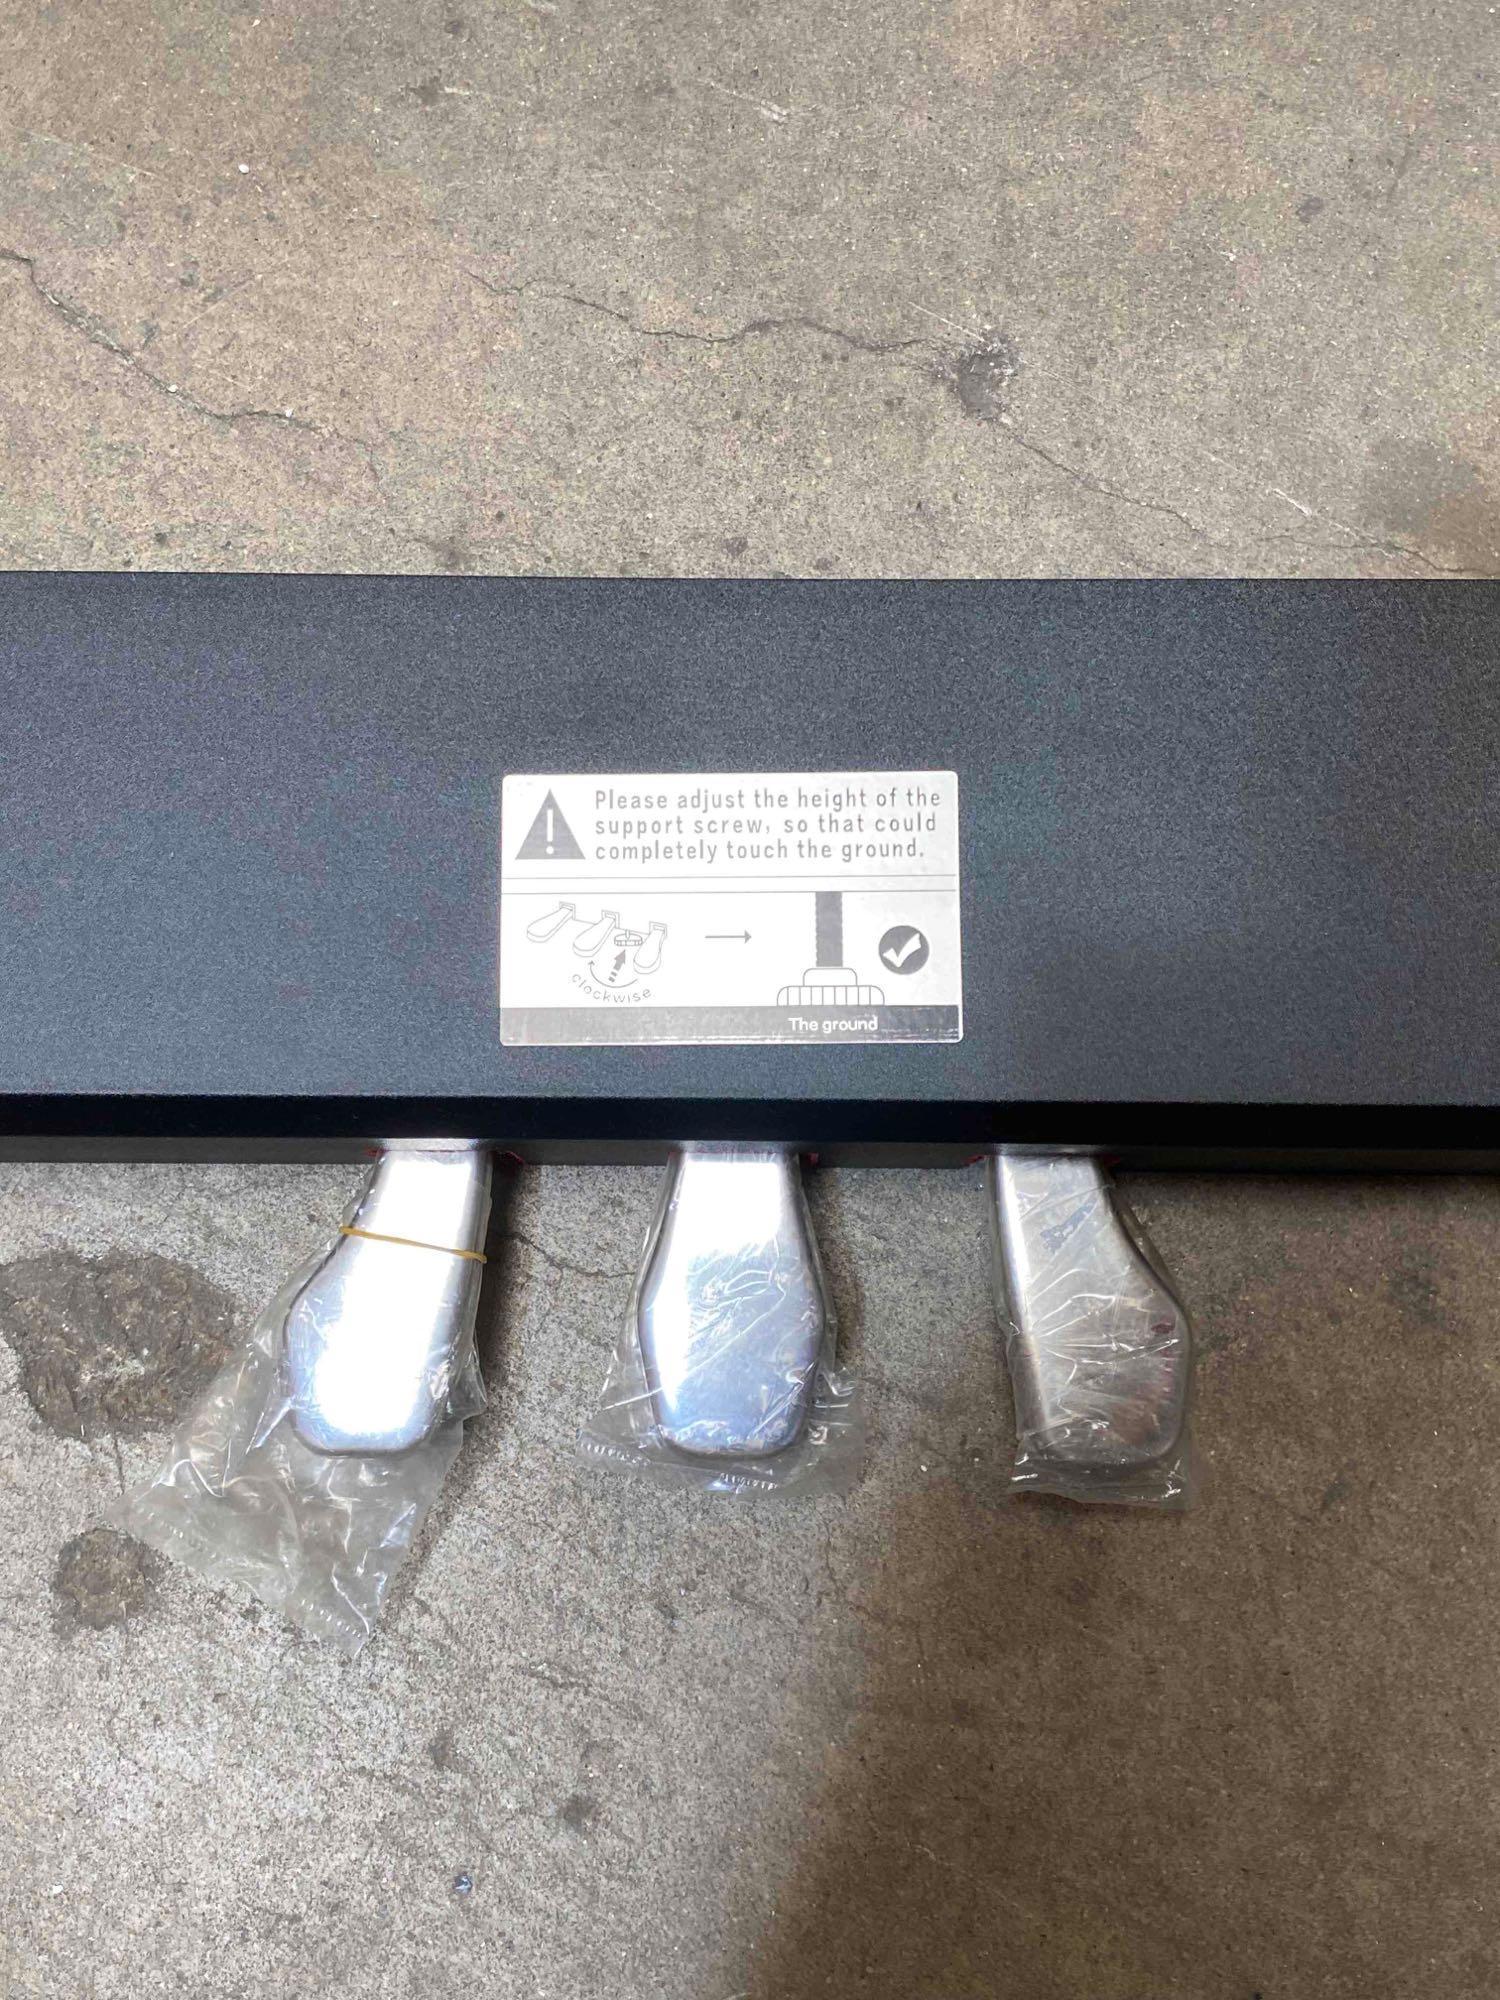 Donner SE-1 88 Key Digital Piano / Graded Hammer Action Weighted Keys